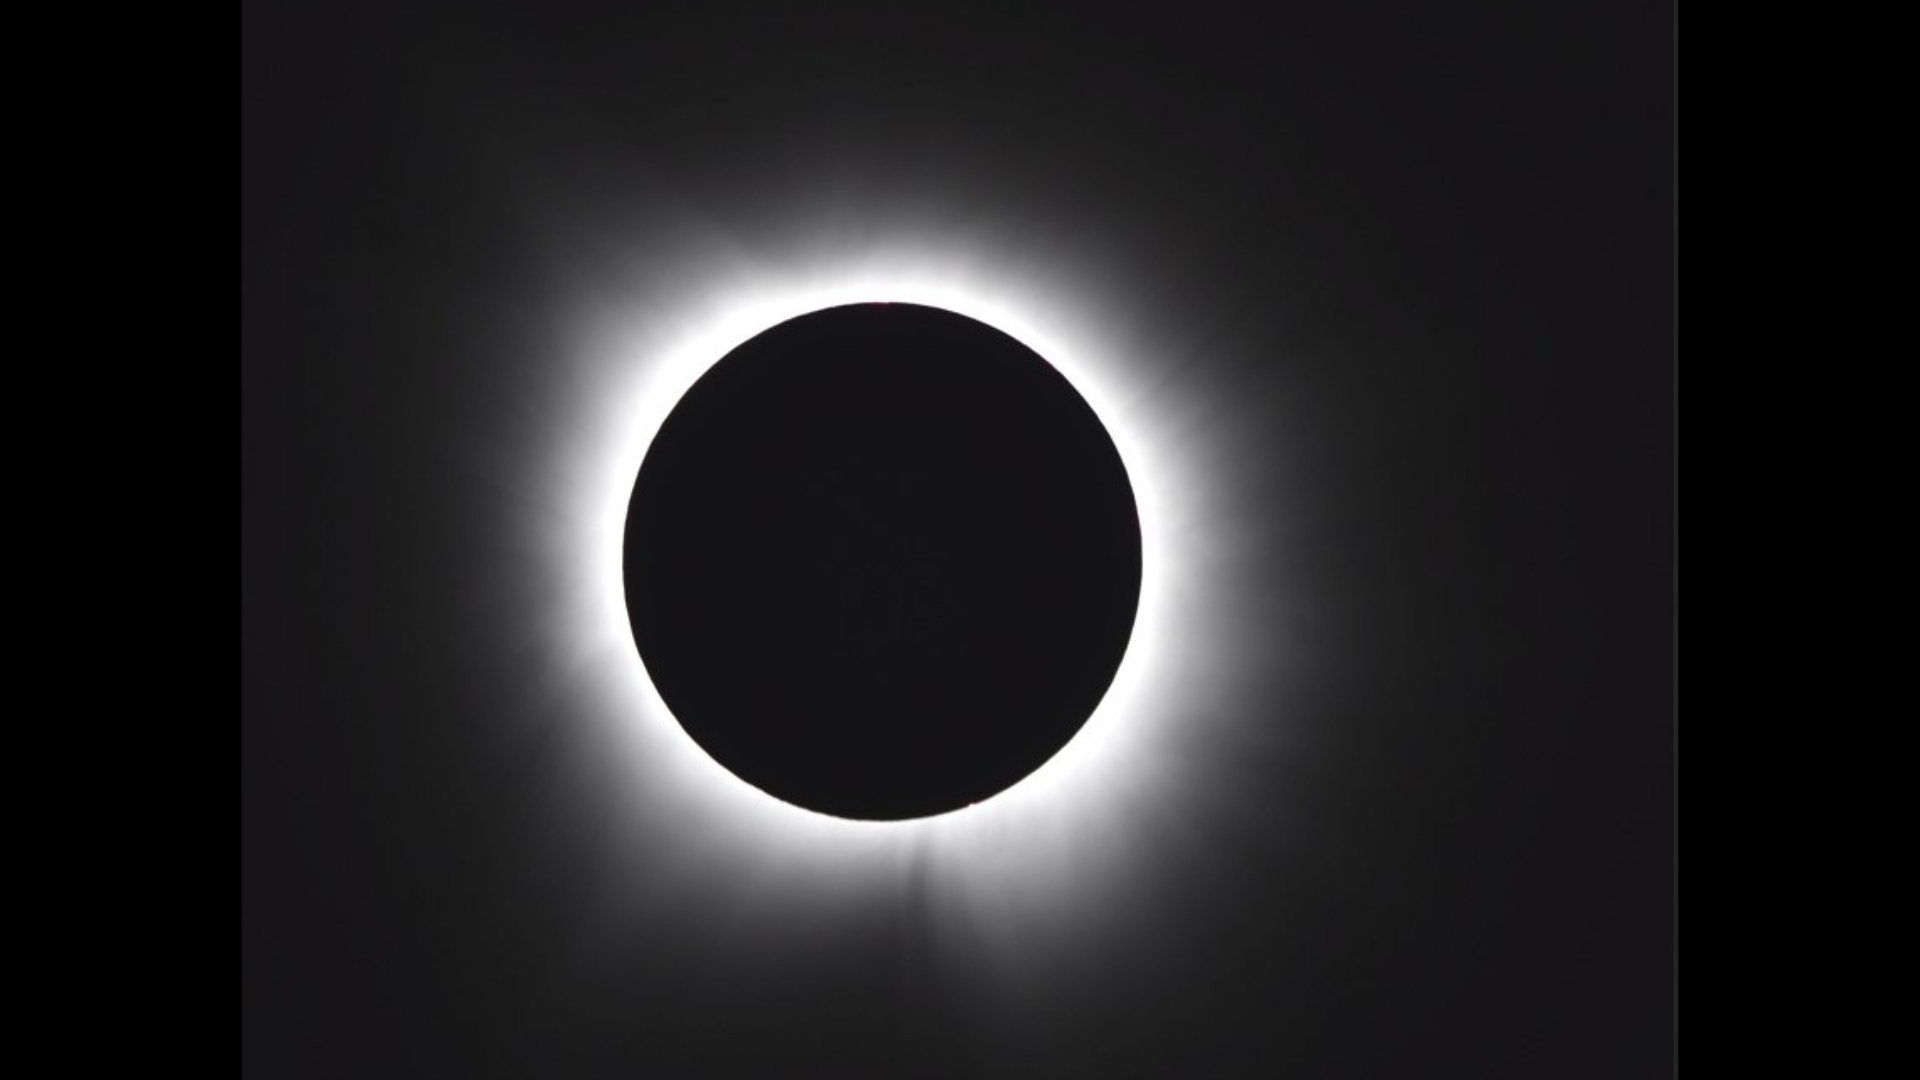 Photo of the 2017 eclipse taken by Beckermann